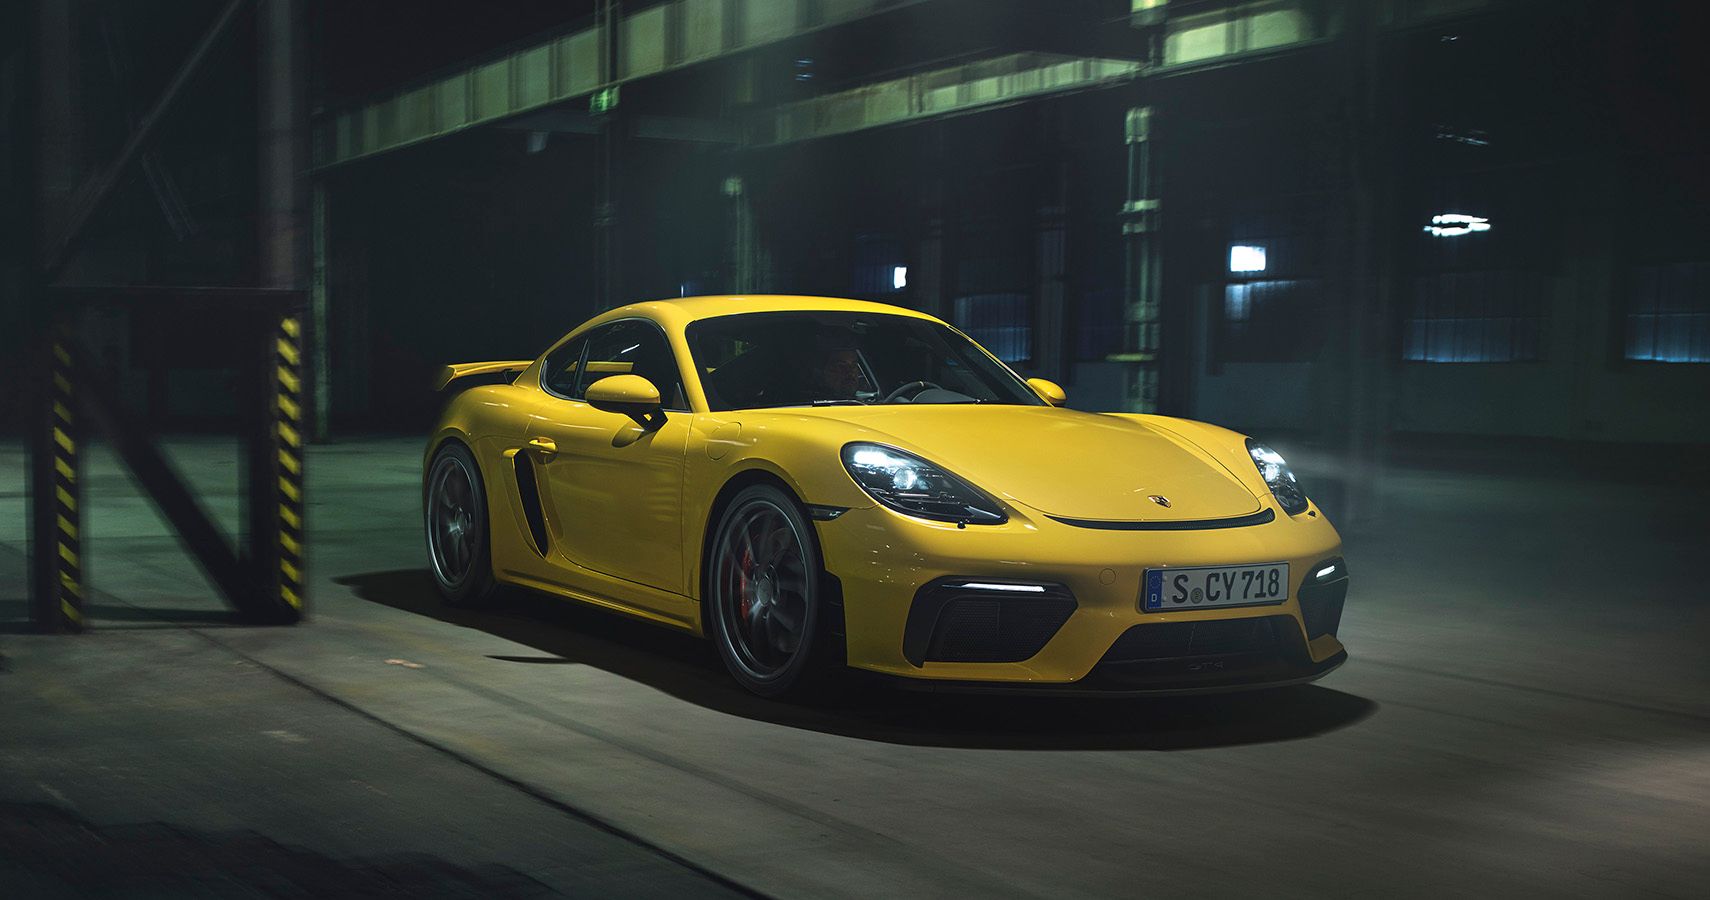 Porsche: Sold Just 11,994 Vehicles